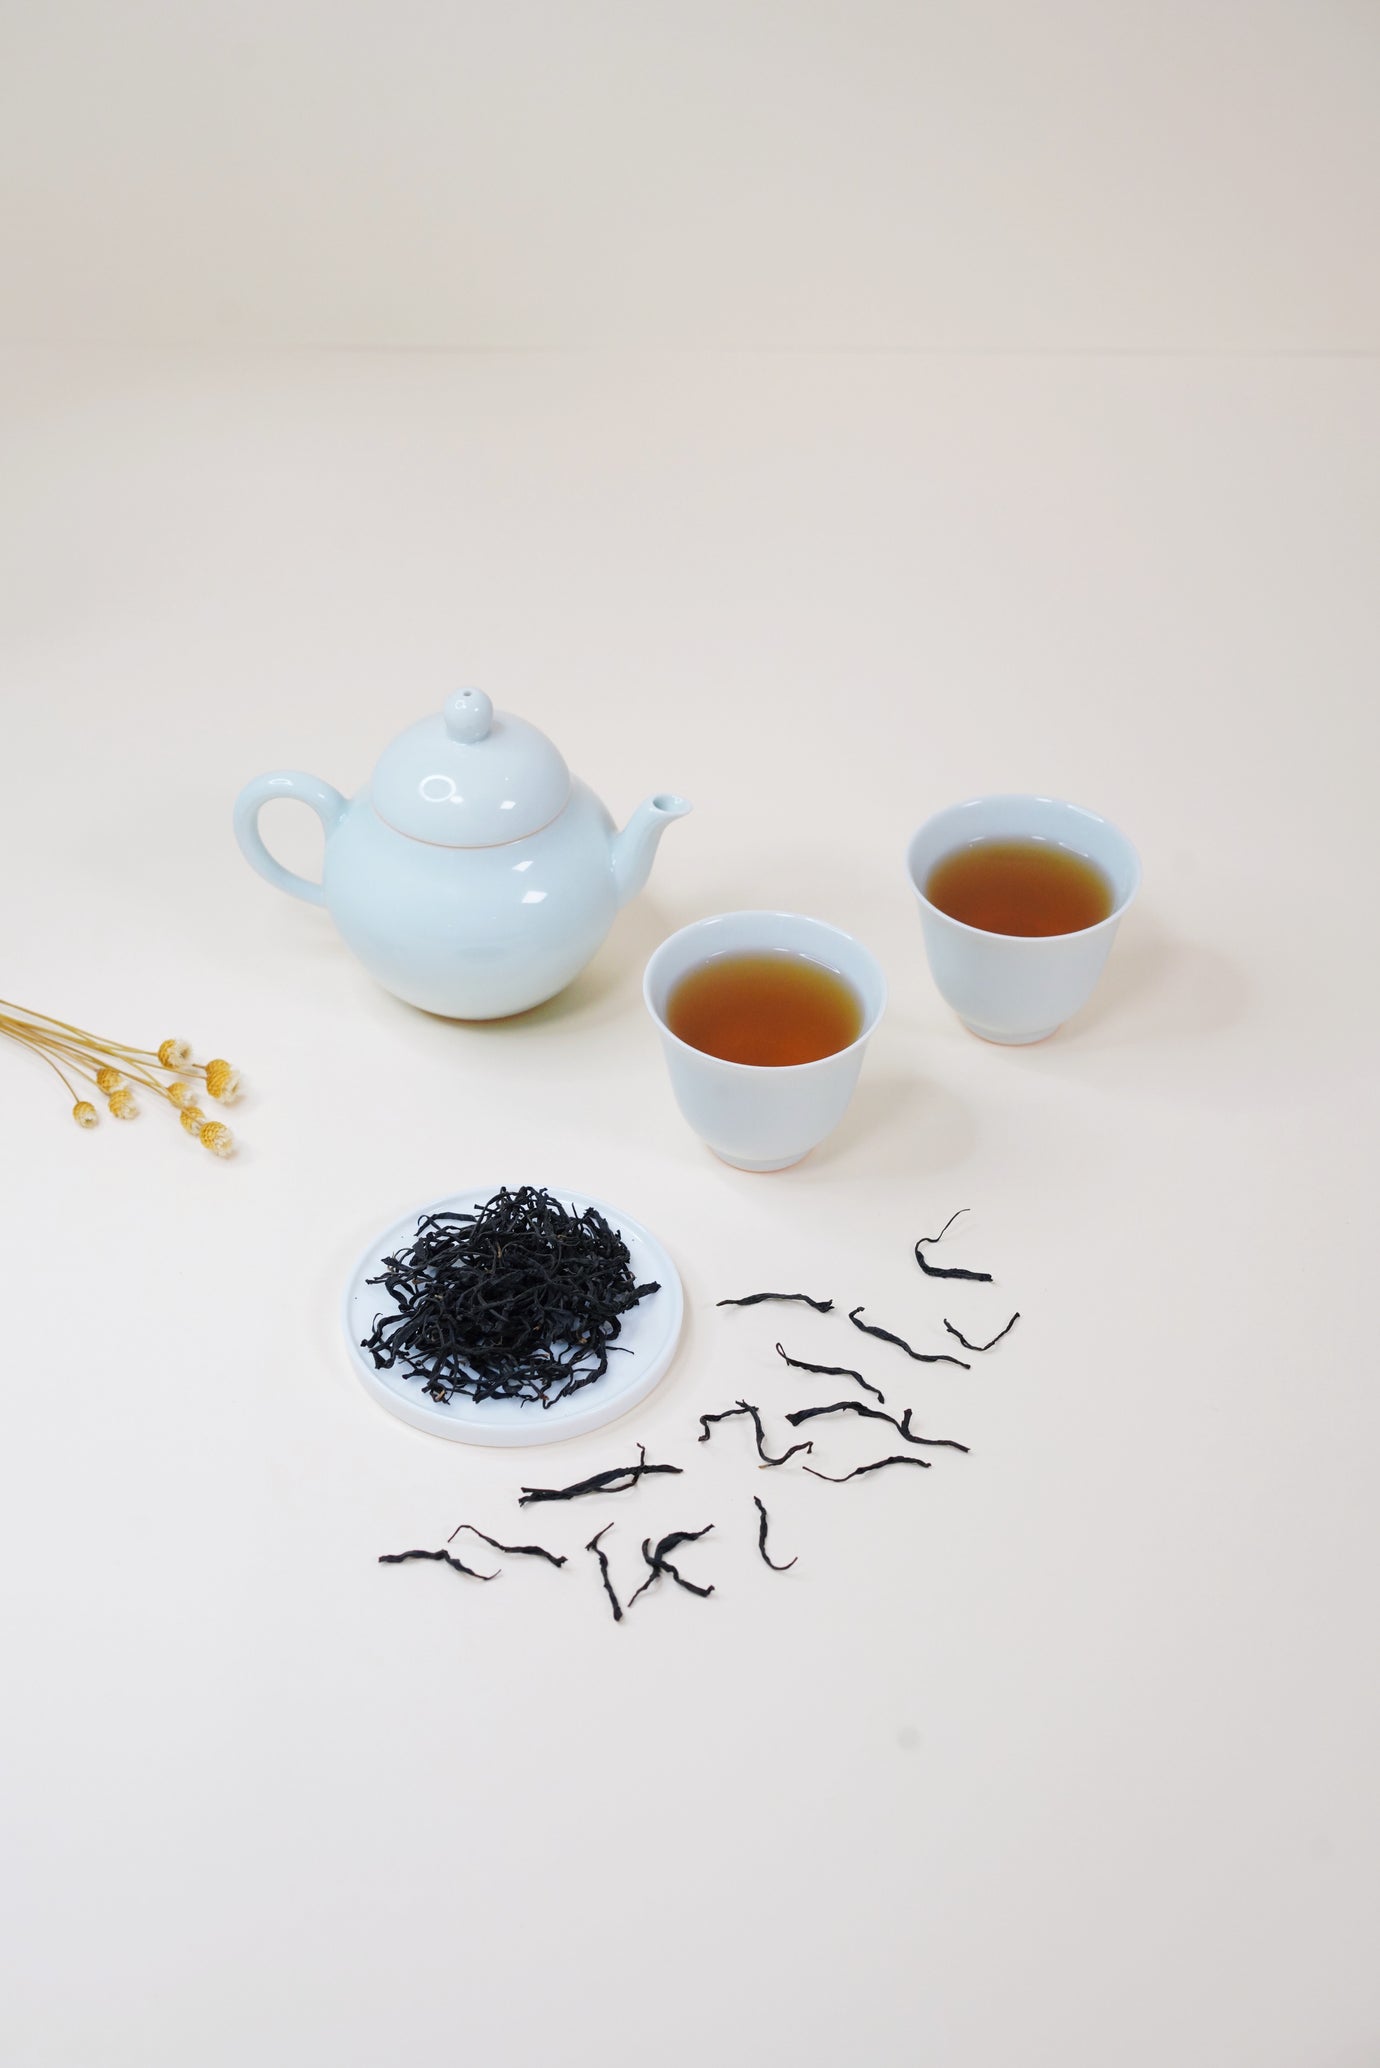 How to make a delicious black tea?